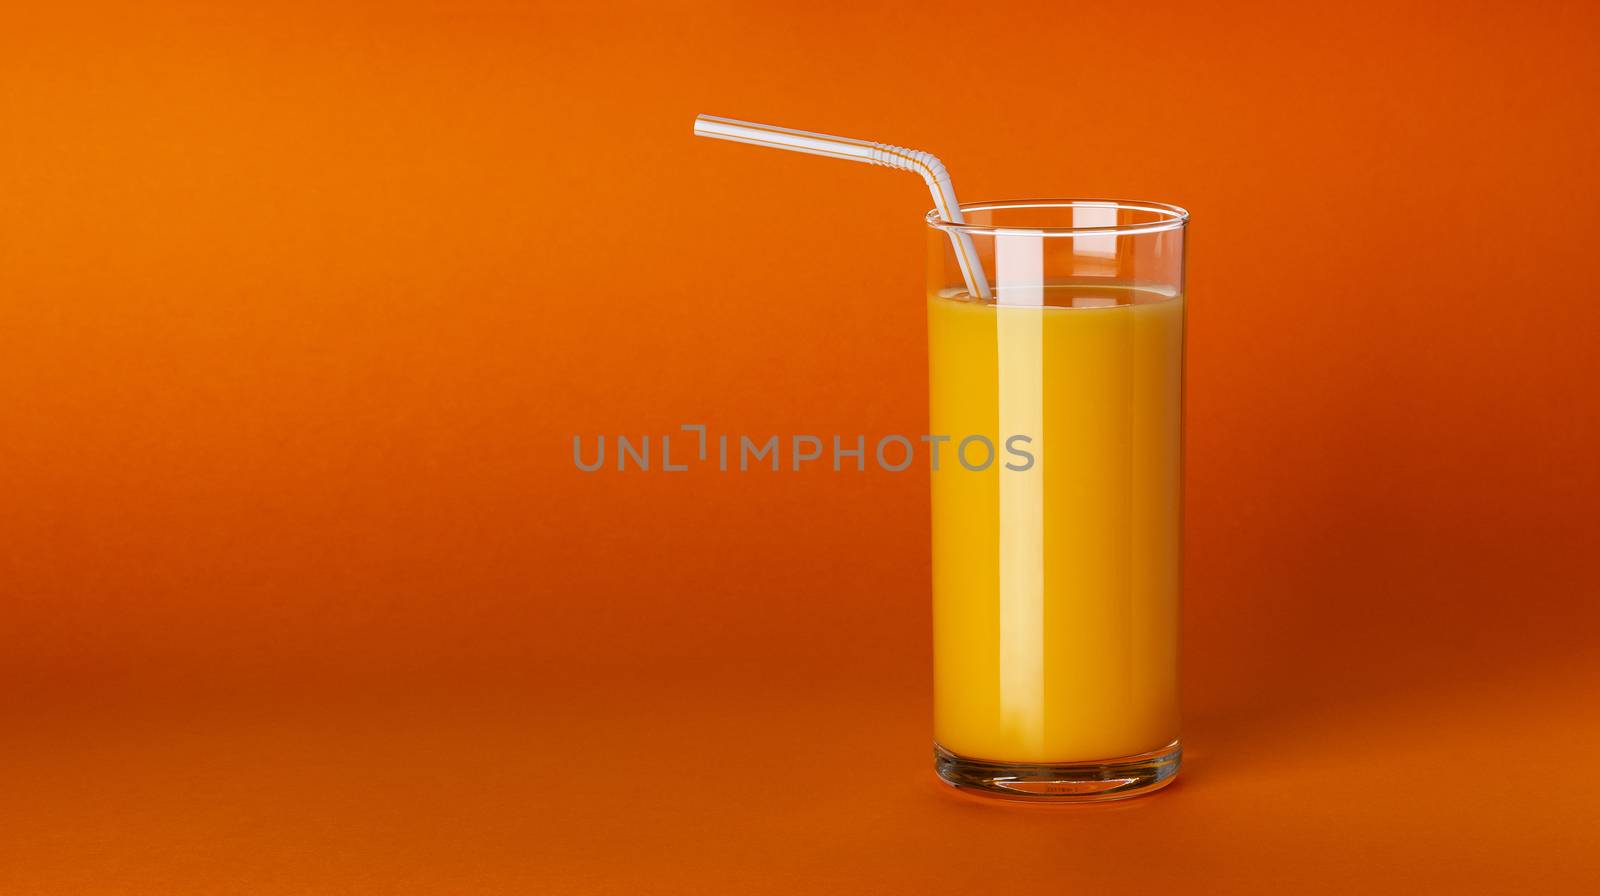 A glass of orange juice on orange background with copy space by xamtiw